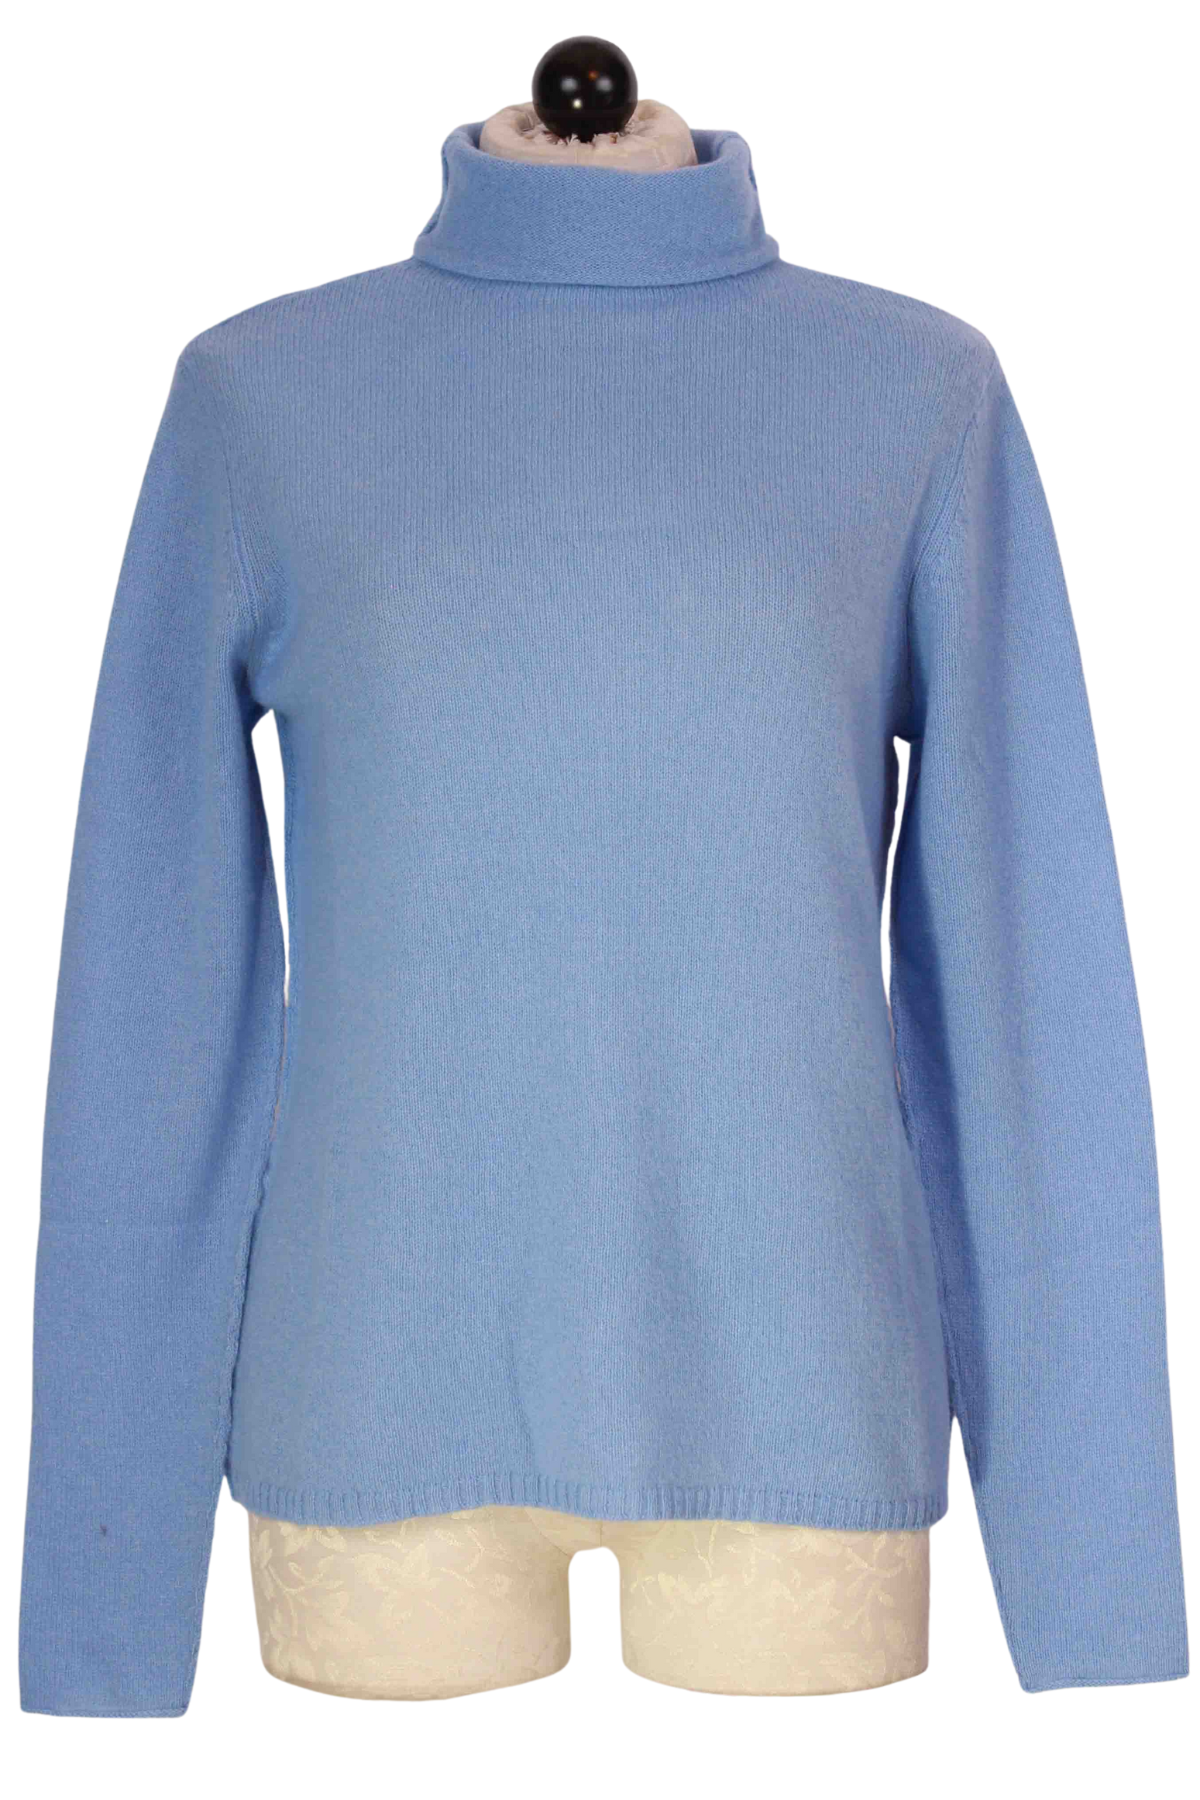 Chapel Hill Blue Harper Lightweight Sweater by Alashan Cashmere